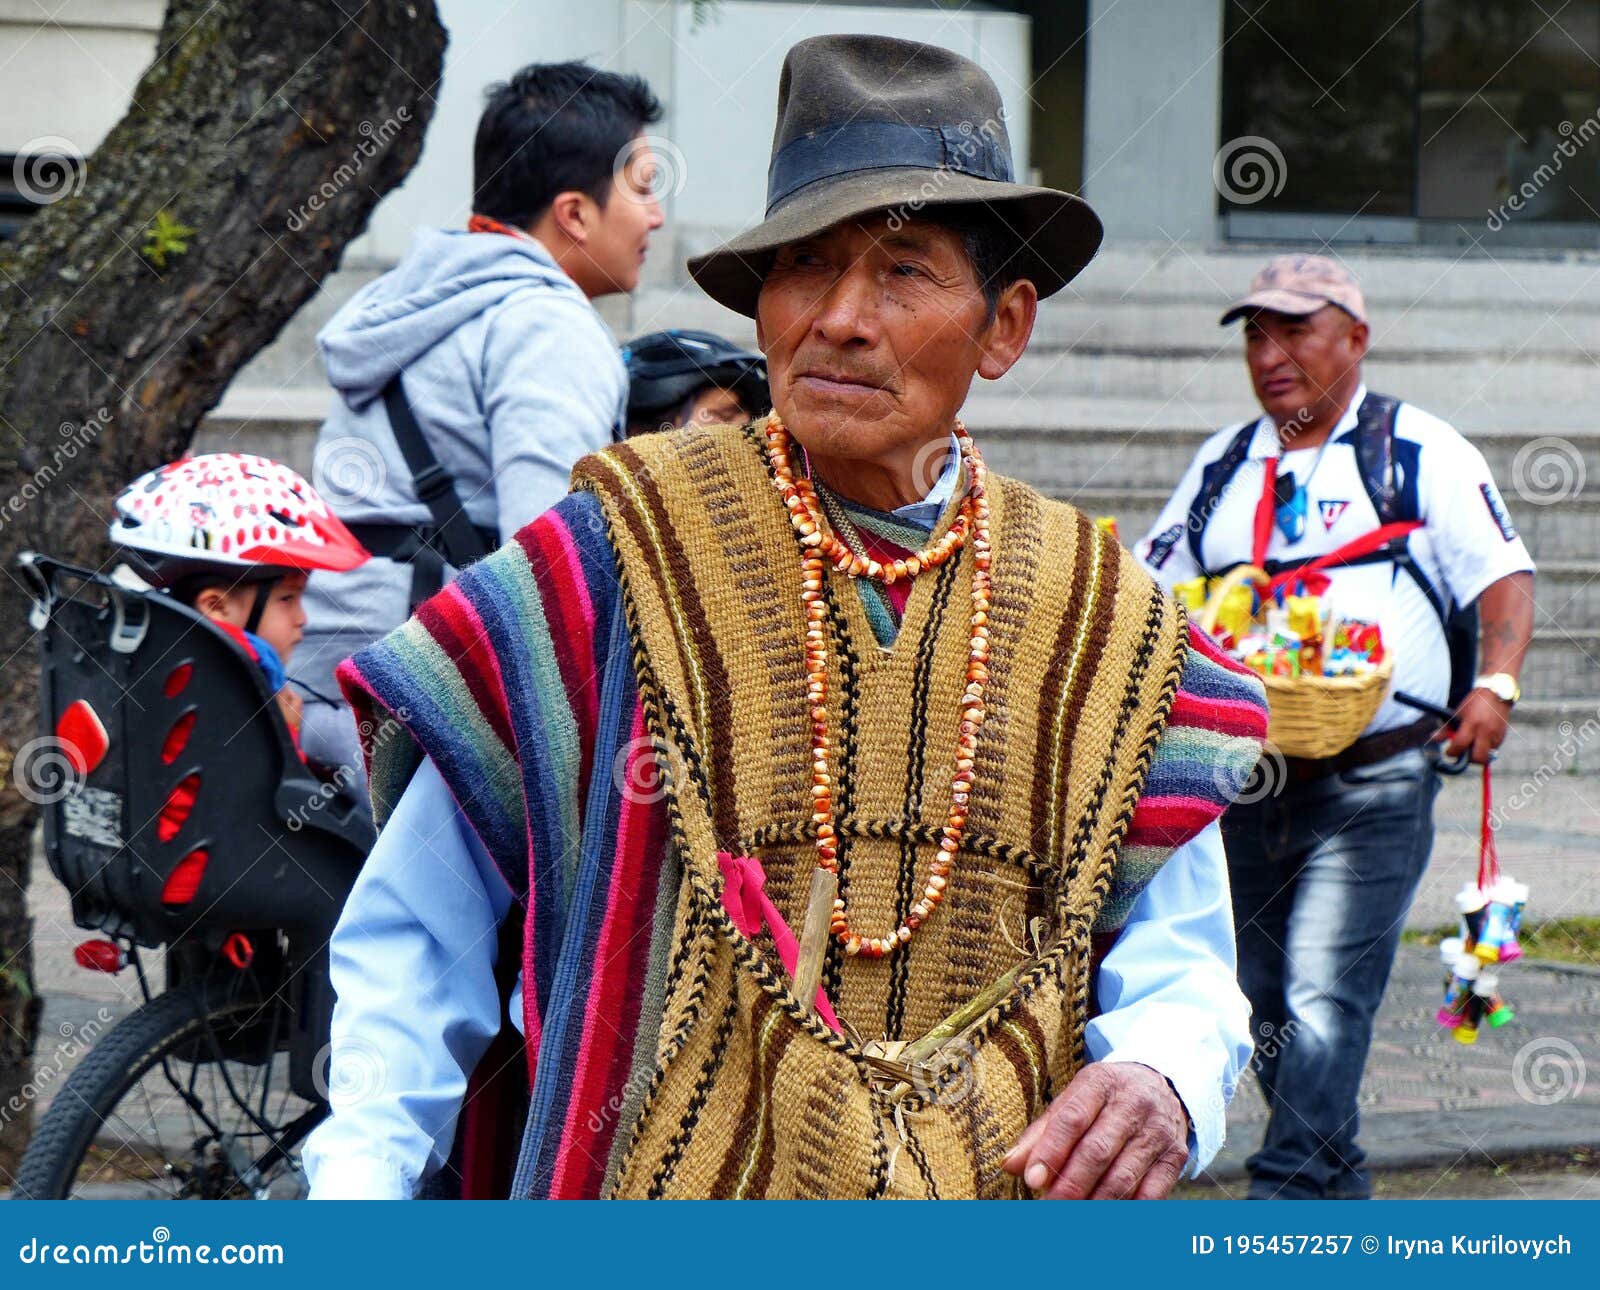 Indigenous Senior Man from Village, Ecuador Editorial Photography ...